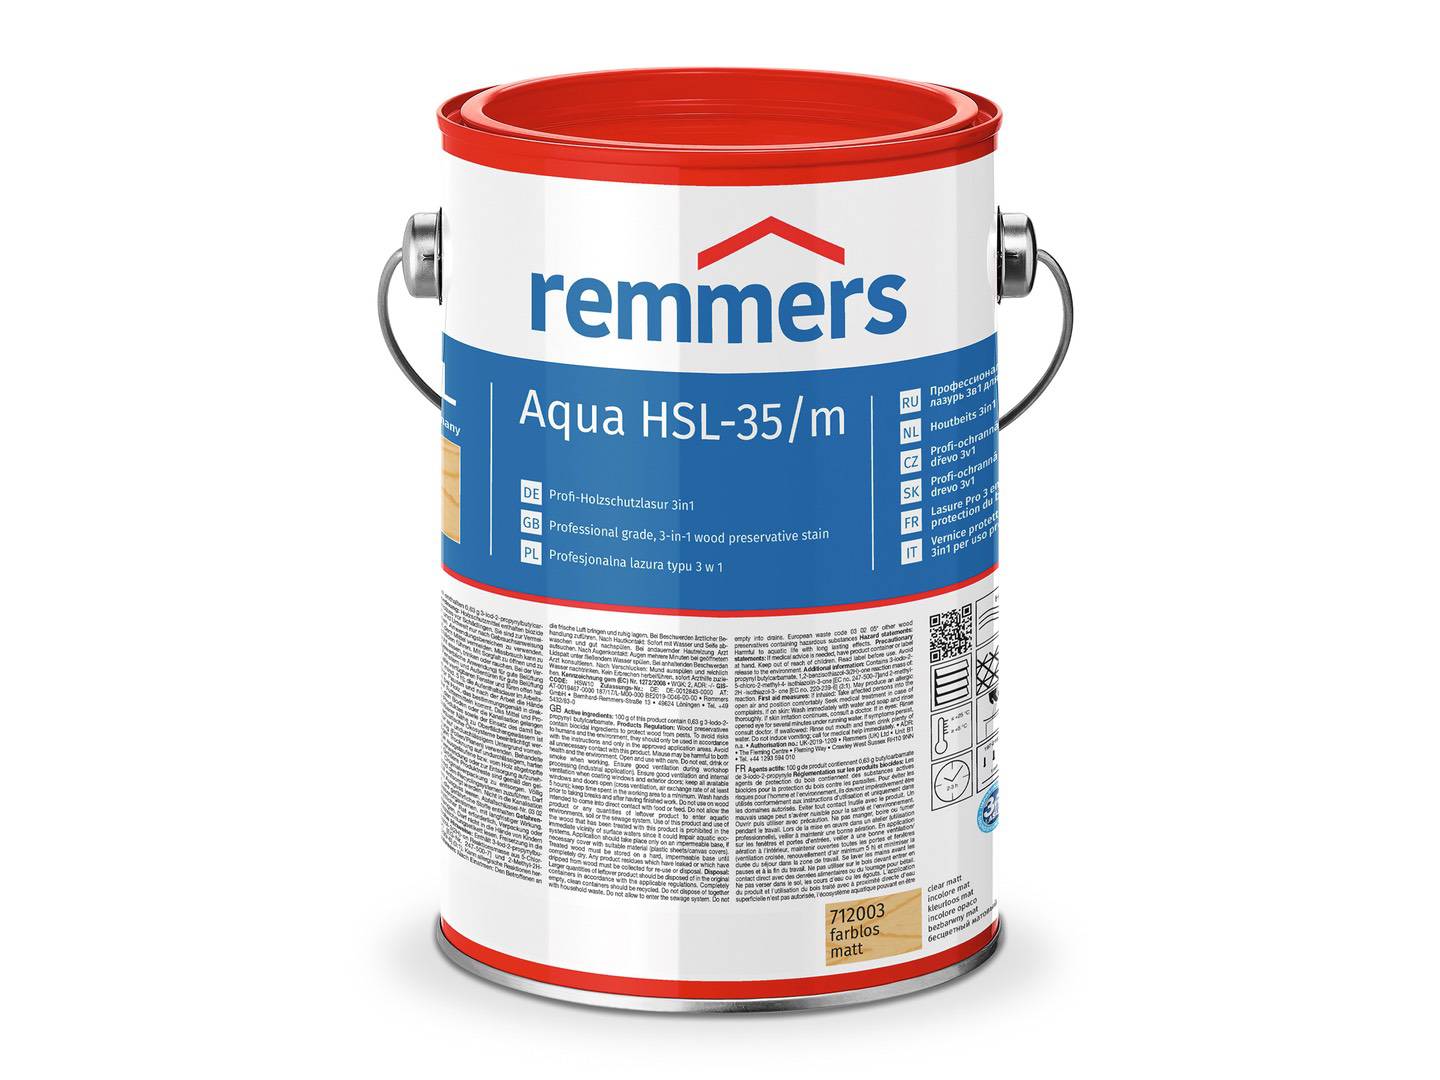 REMMERS Aqua HSL-35/m-Profi-Holzschutz-Lasur 3in1 silbergrau (RC-970) 20 l